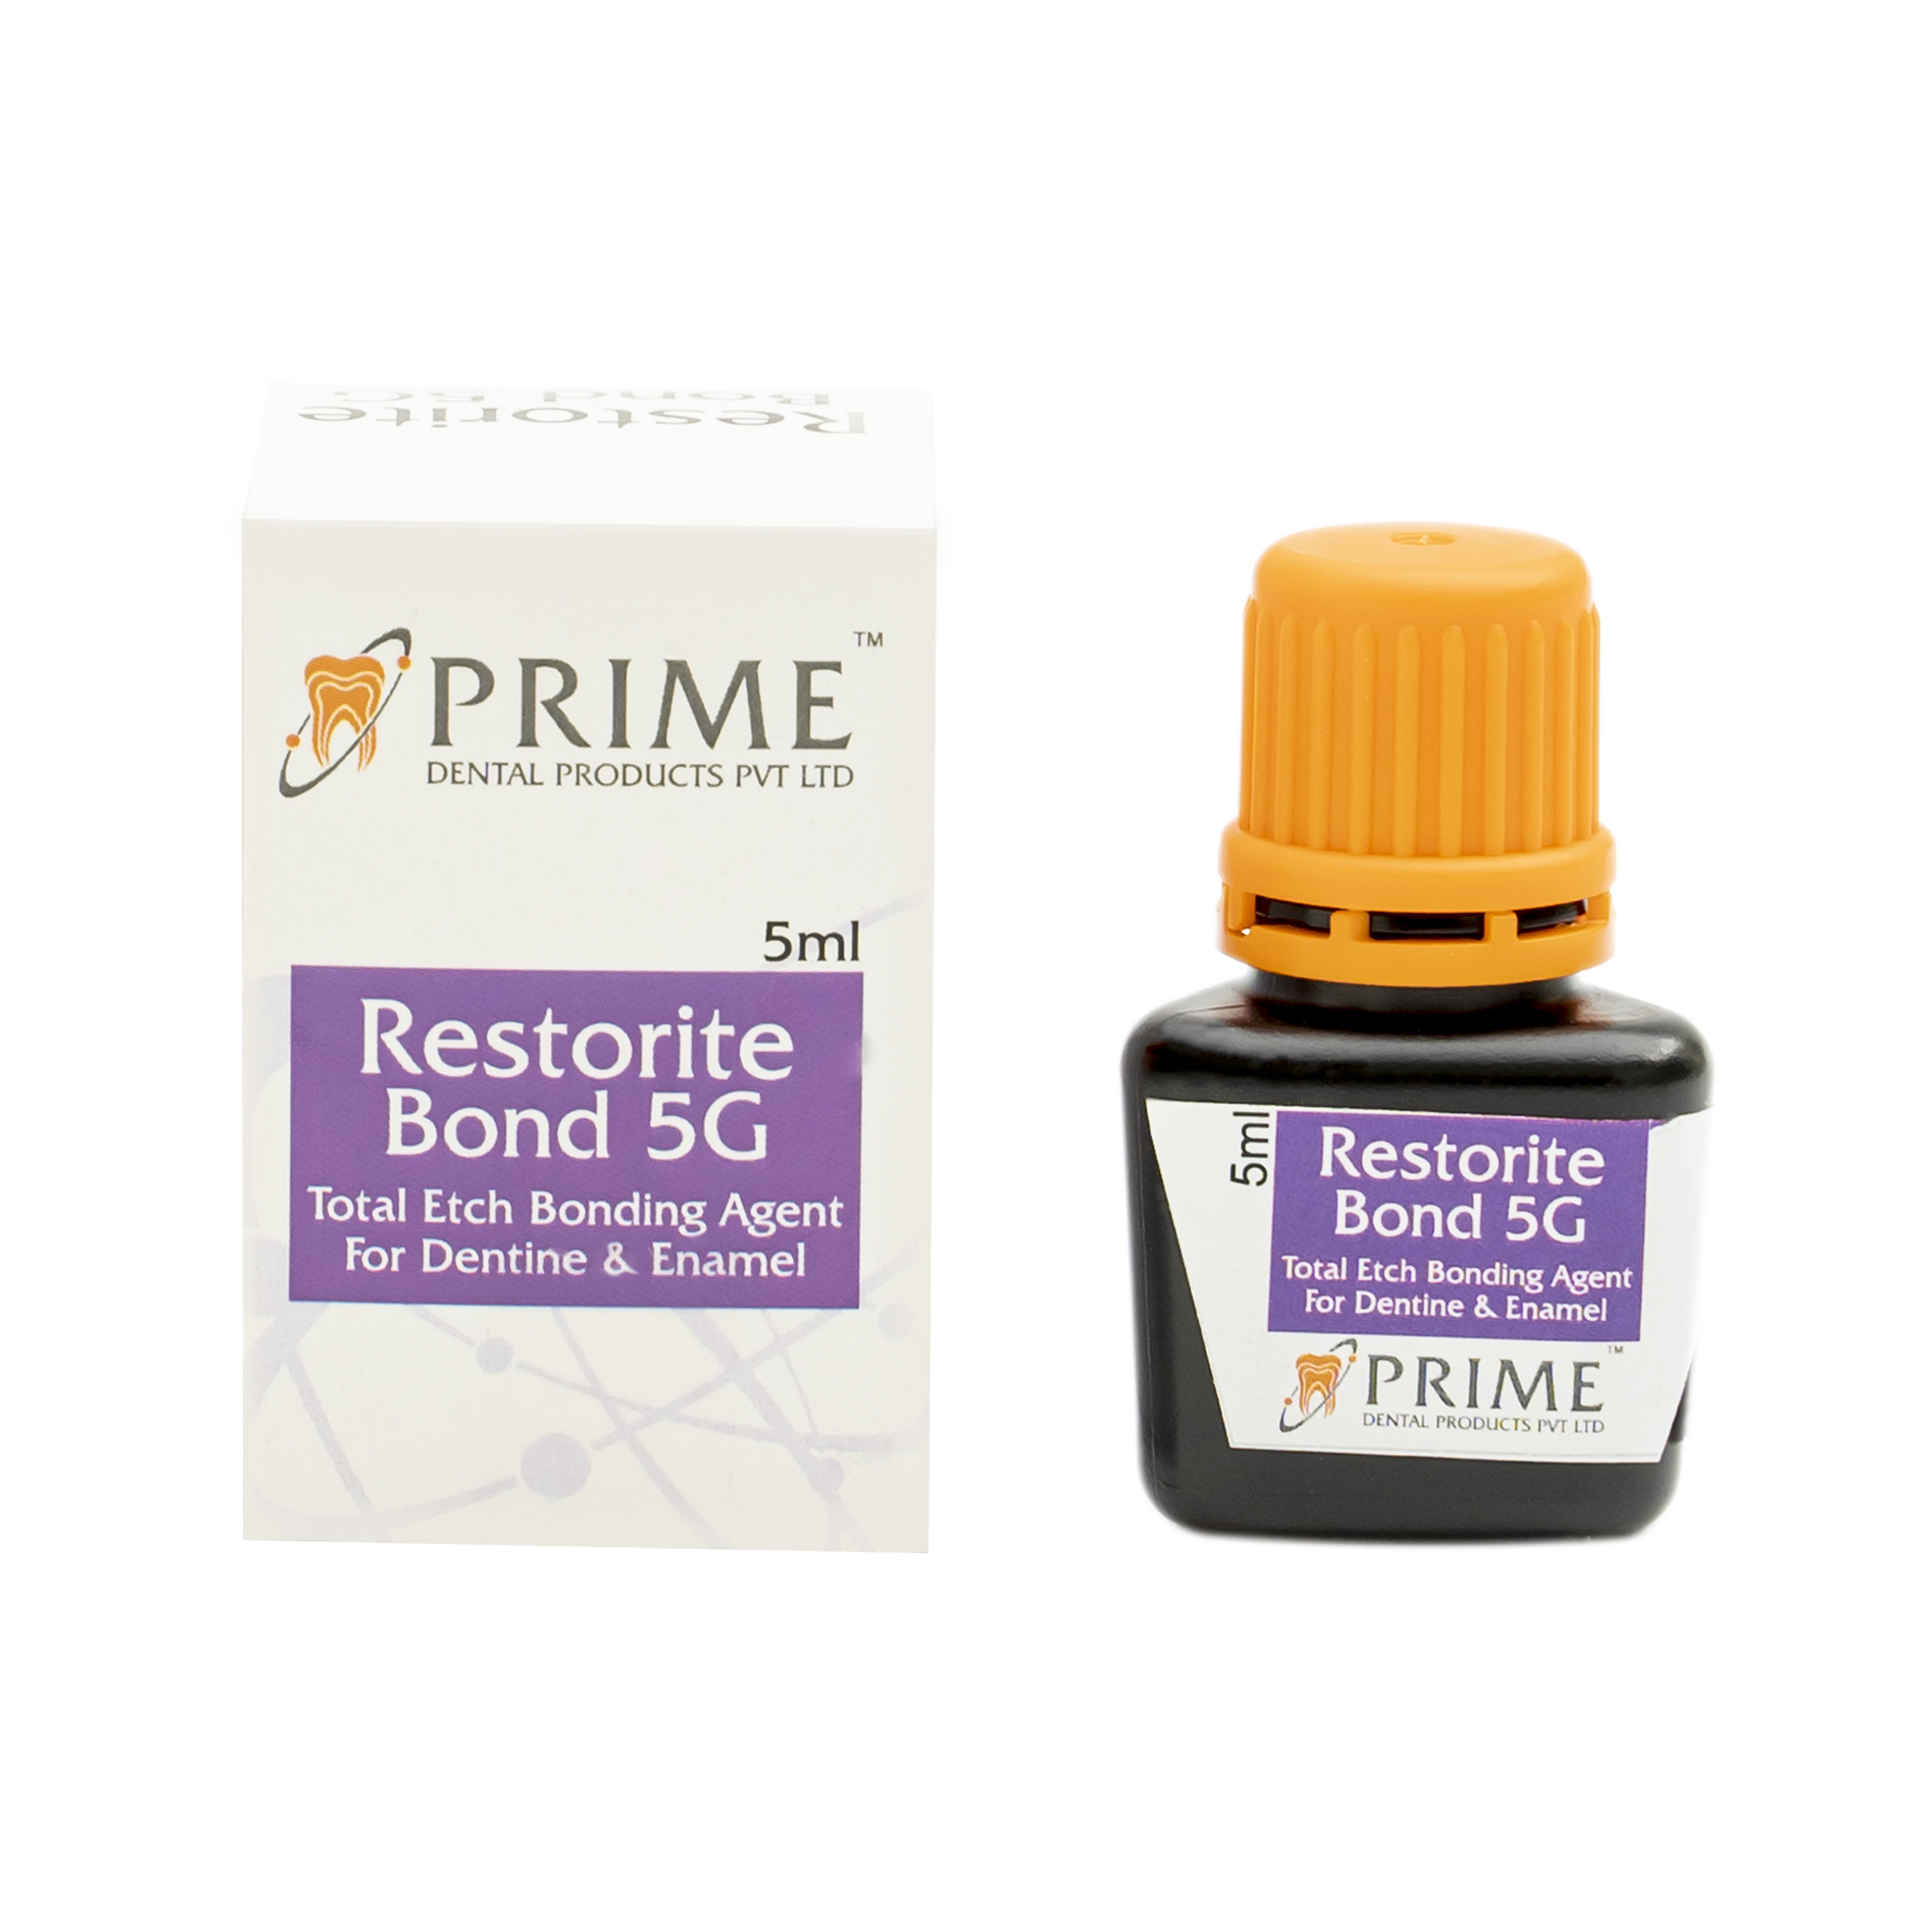 Prime Restorite Bond 5G